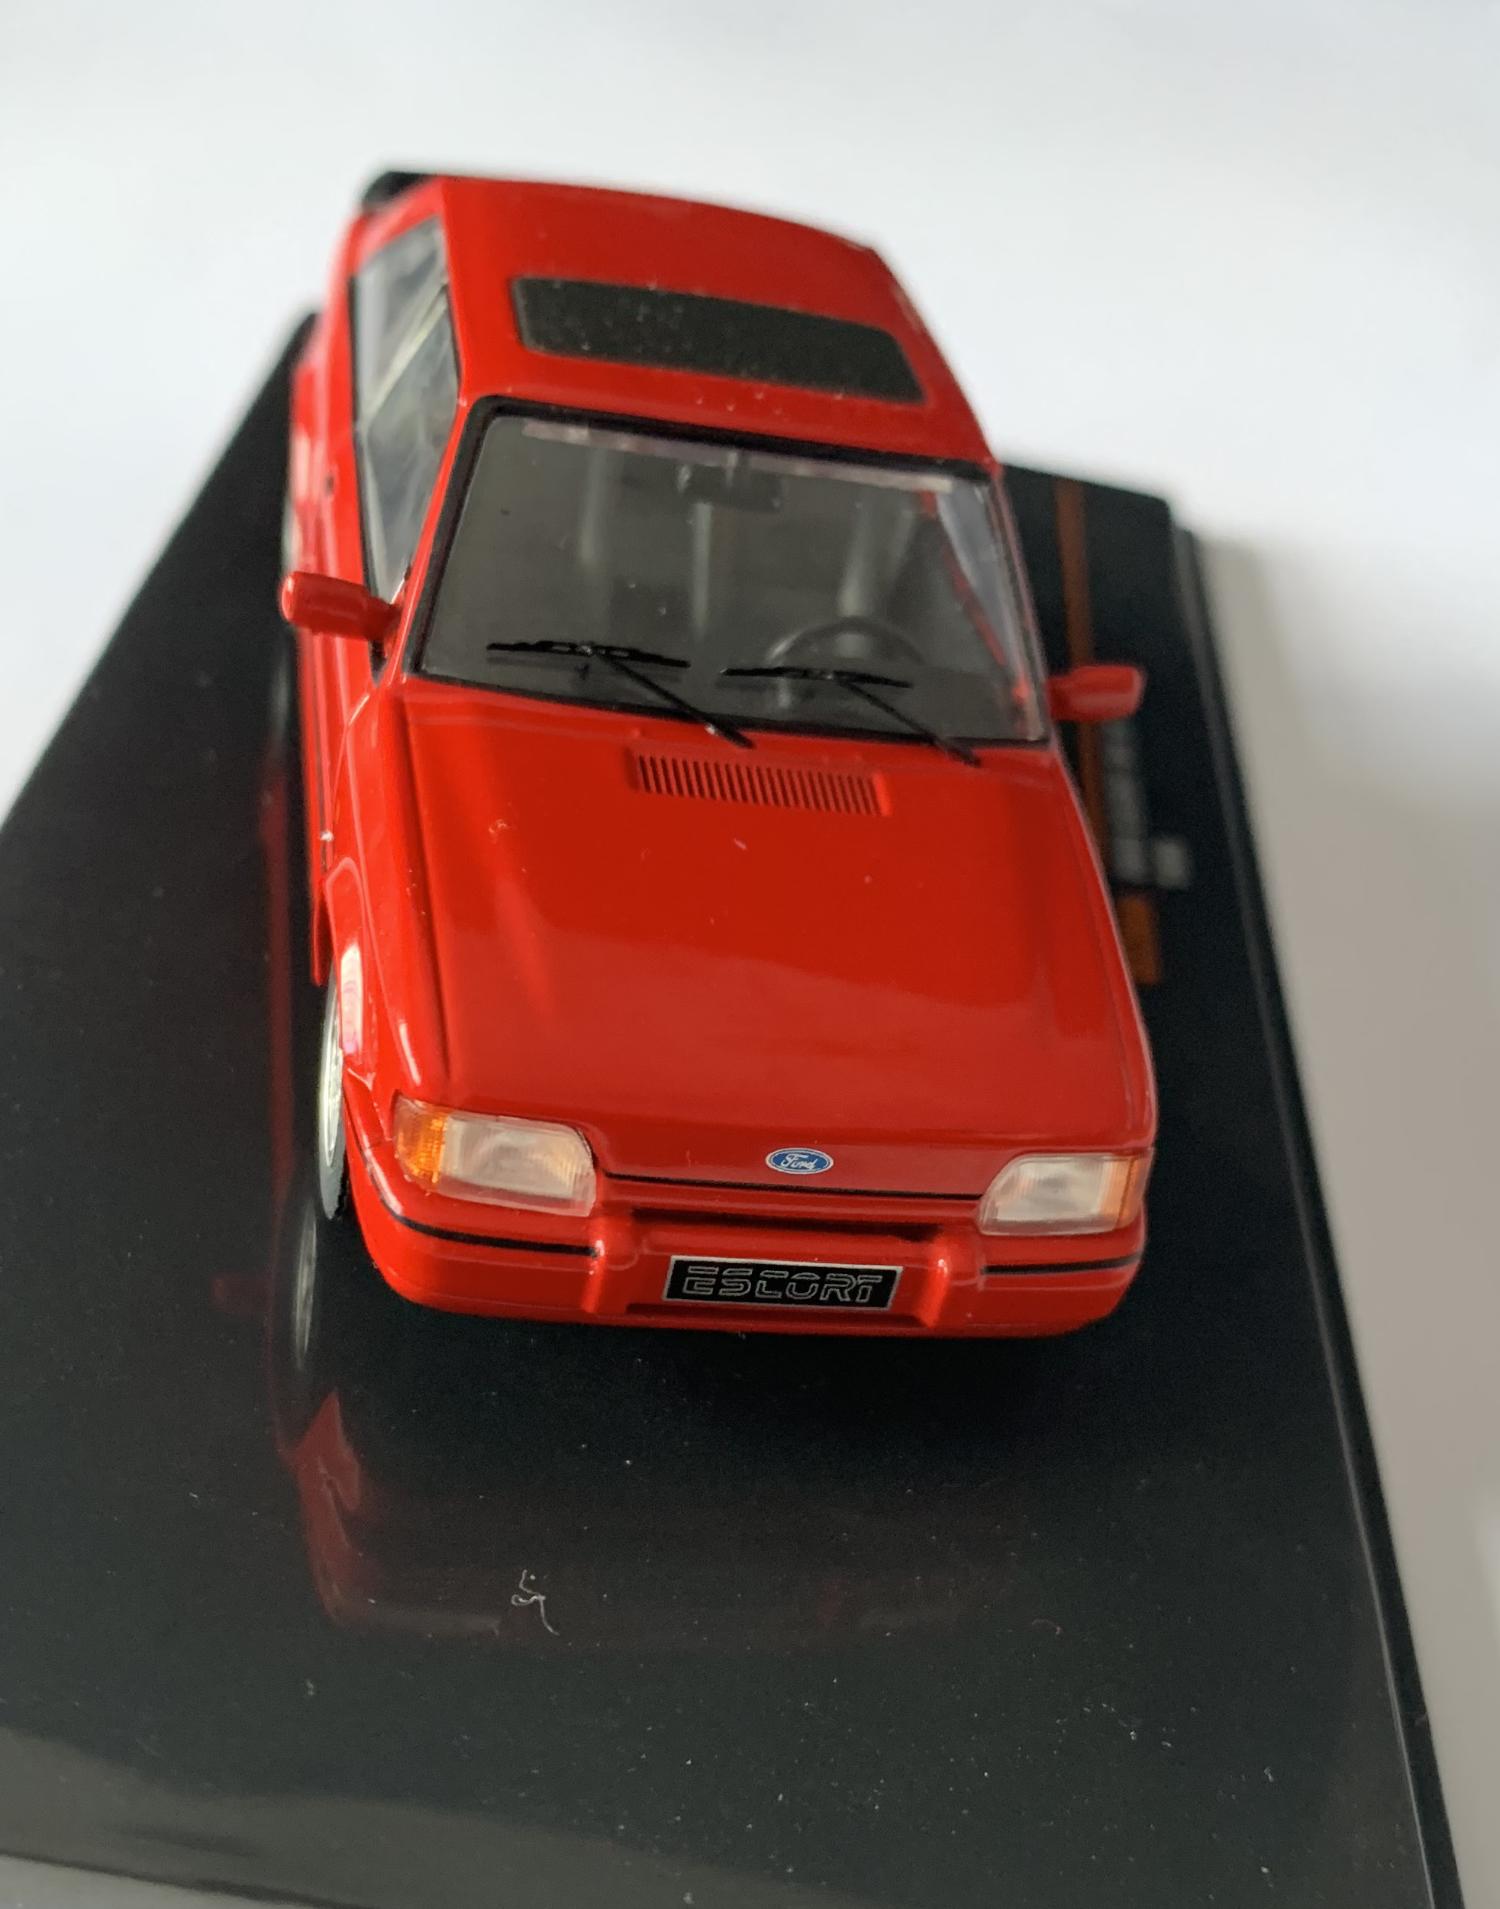 Ford Escort mk4 XR3i 1990 in red 1:43 scale model from IXO, CLC395N